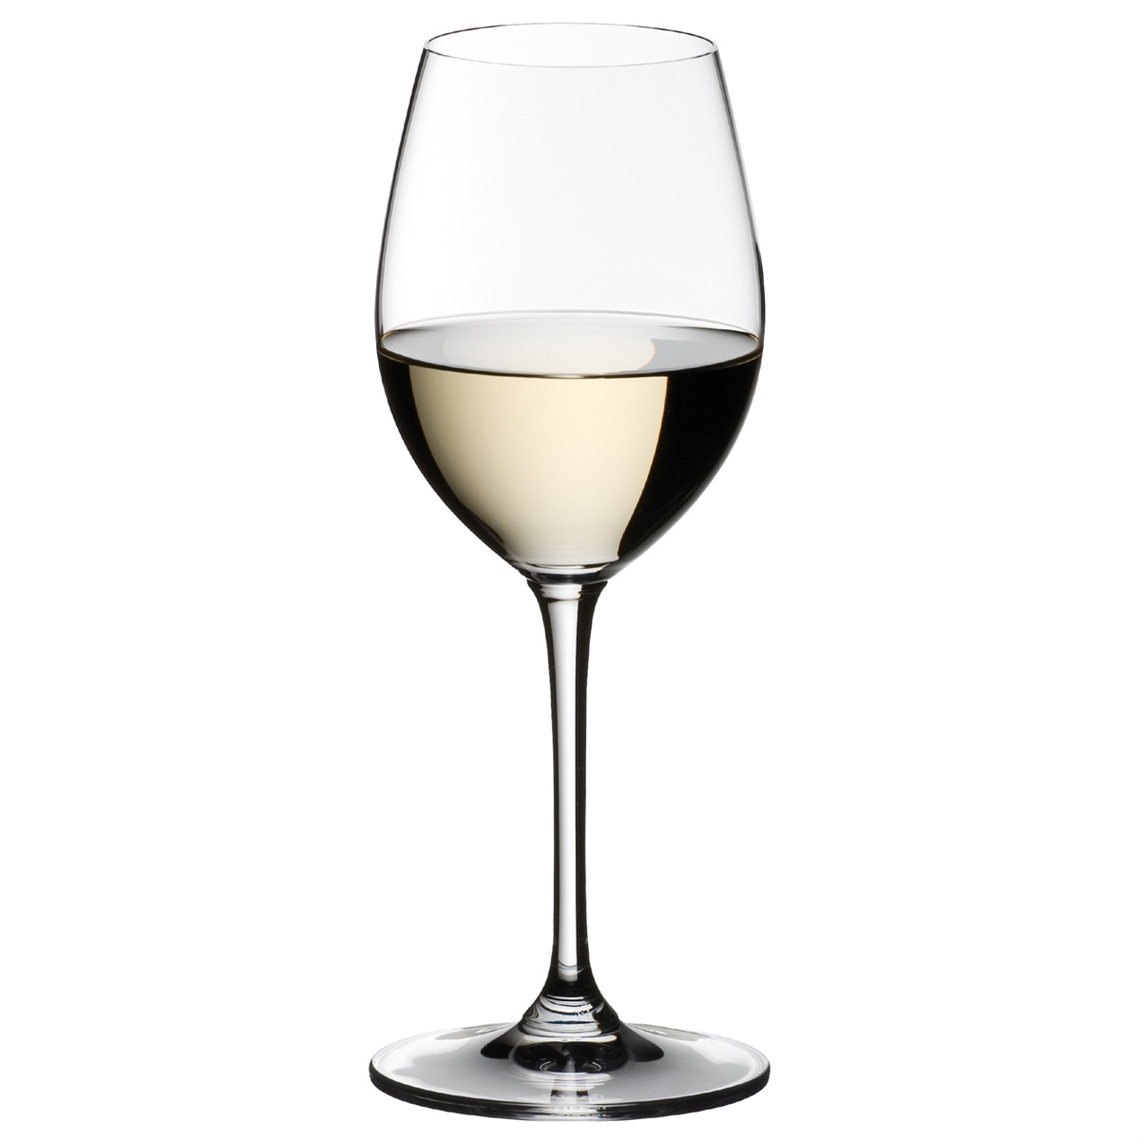 View more luigi bormioli from our Dessert Wine Glasses range